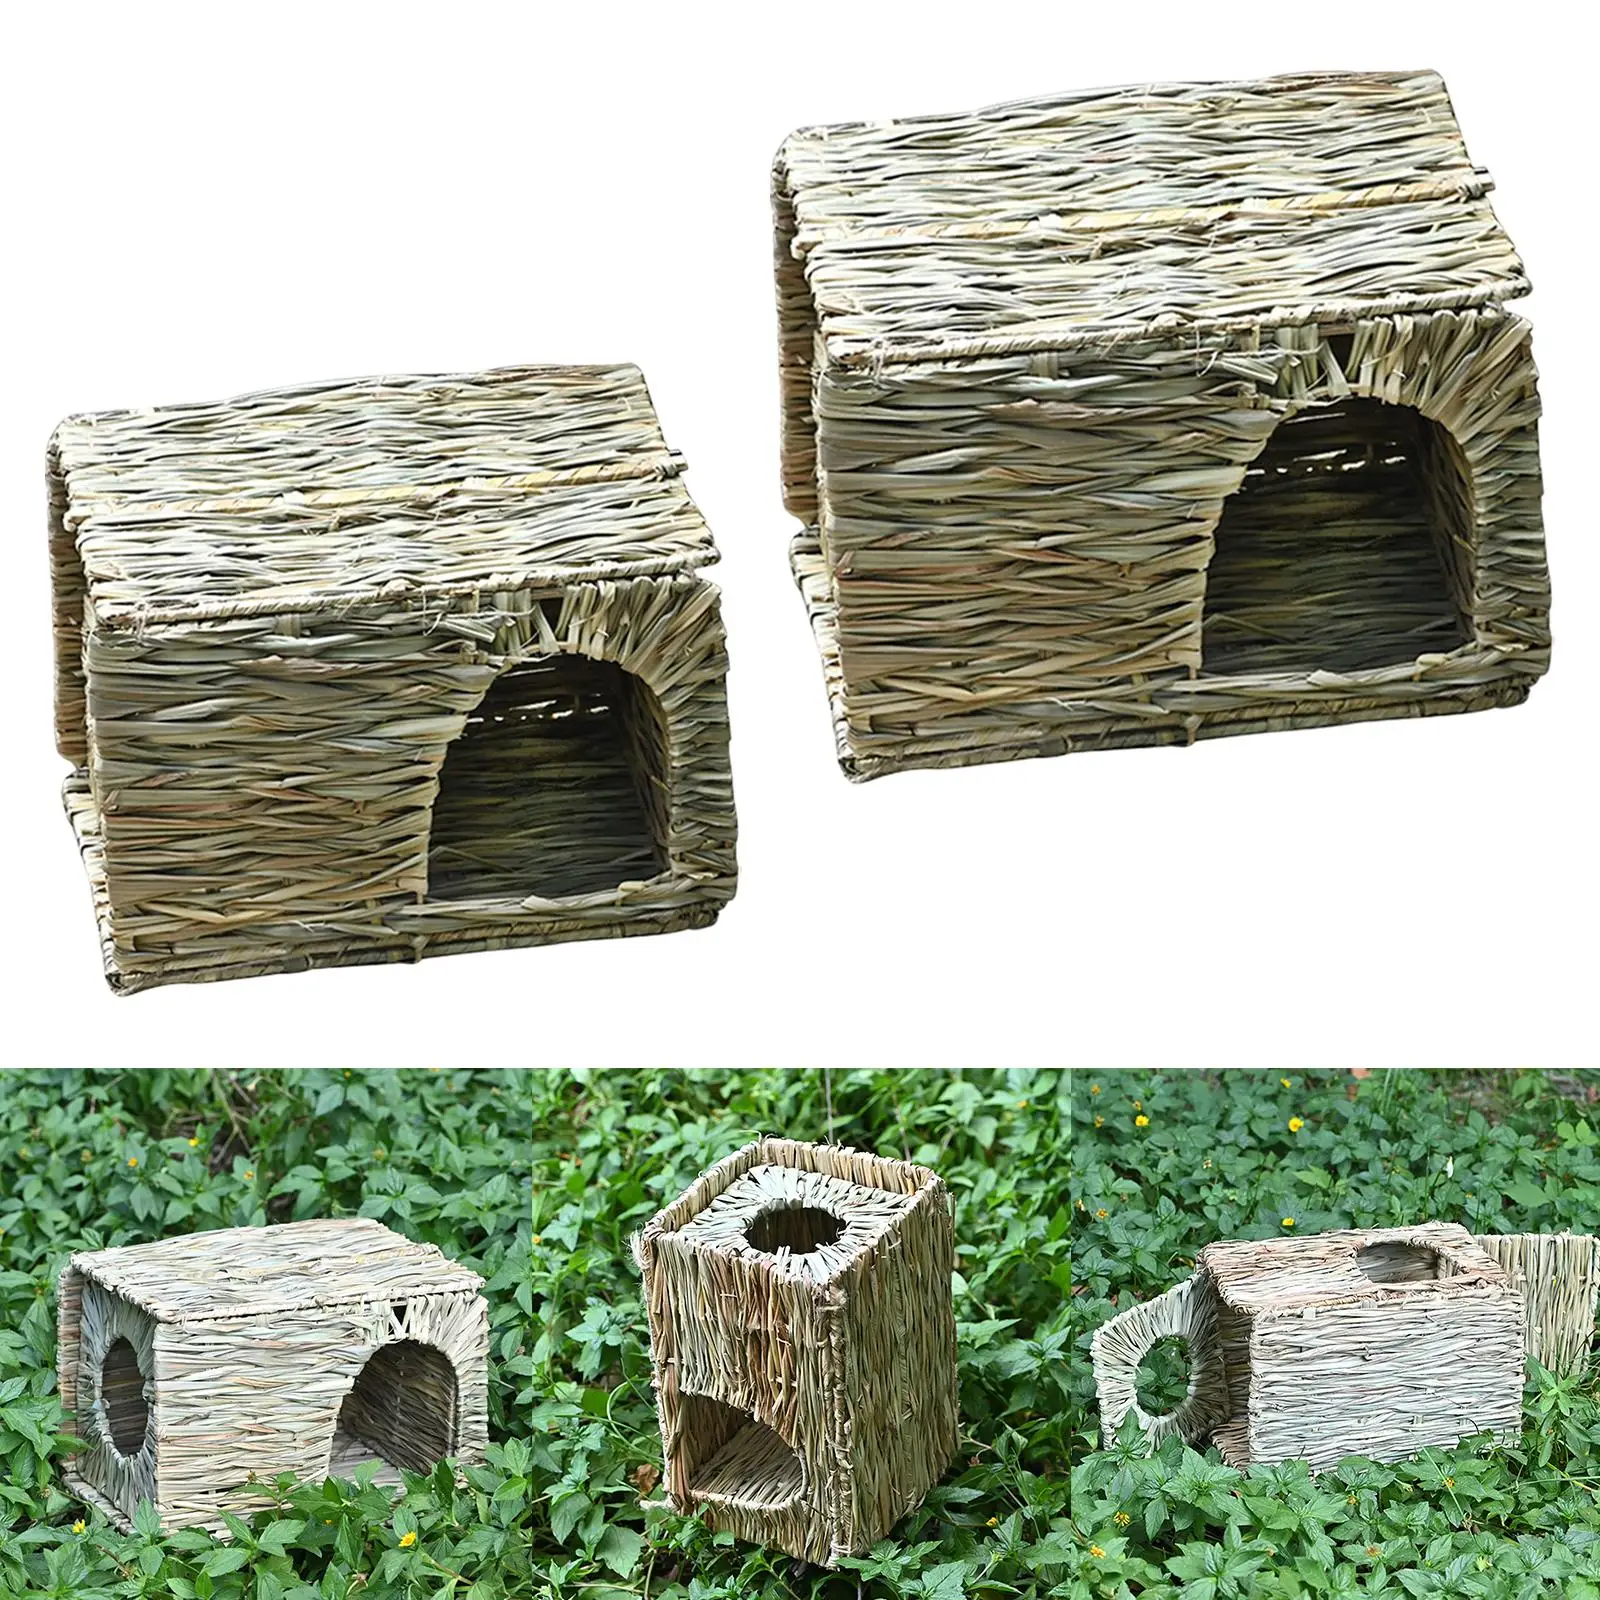 Bird Cage, Natural Straw Birdhouse, Resting Place for Birds, Handmade Birds Nest Straw Bird Shelter Cage